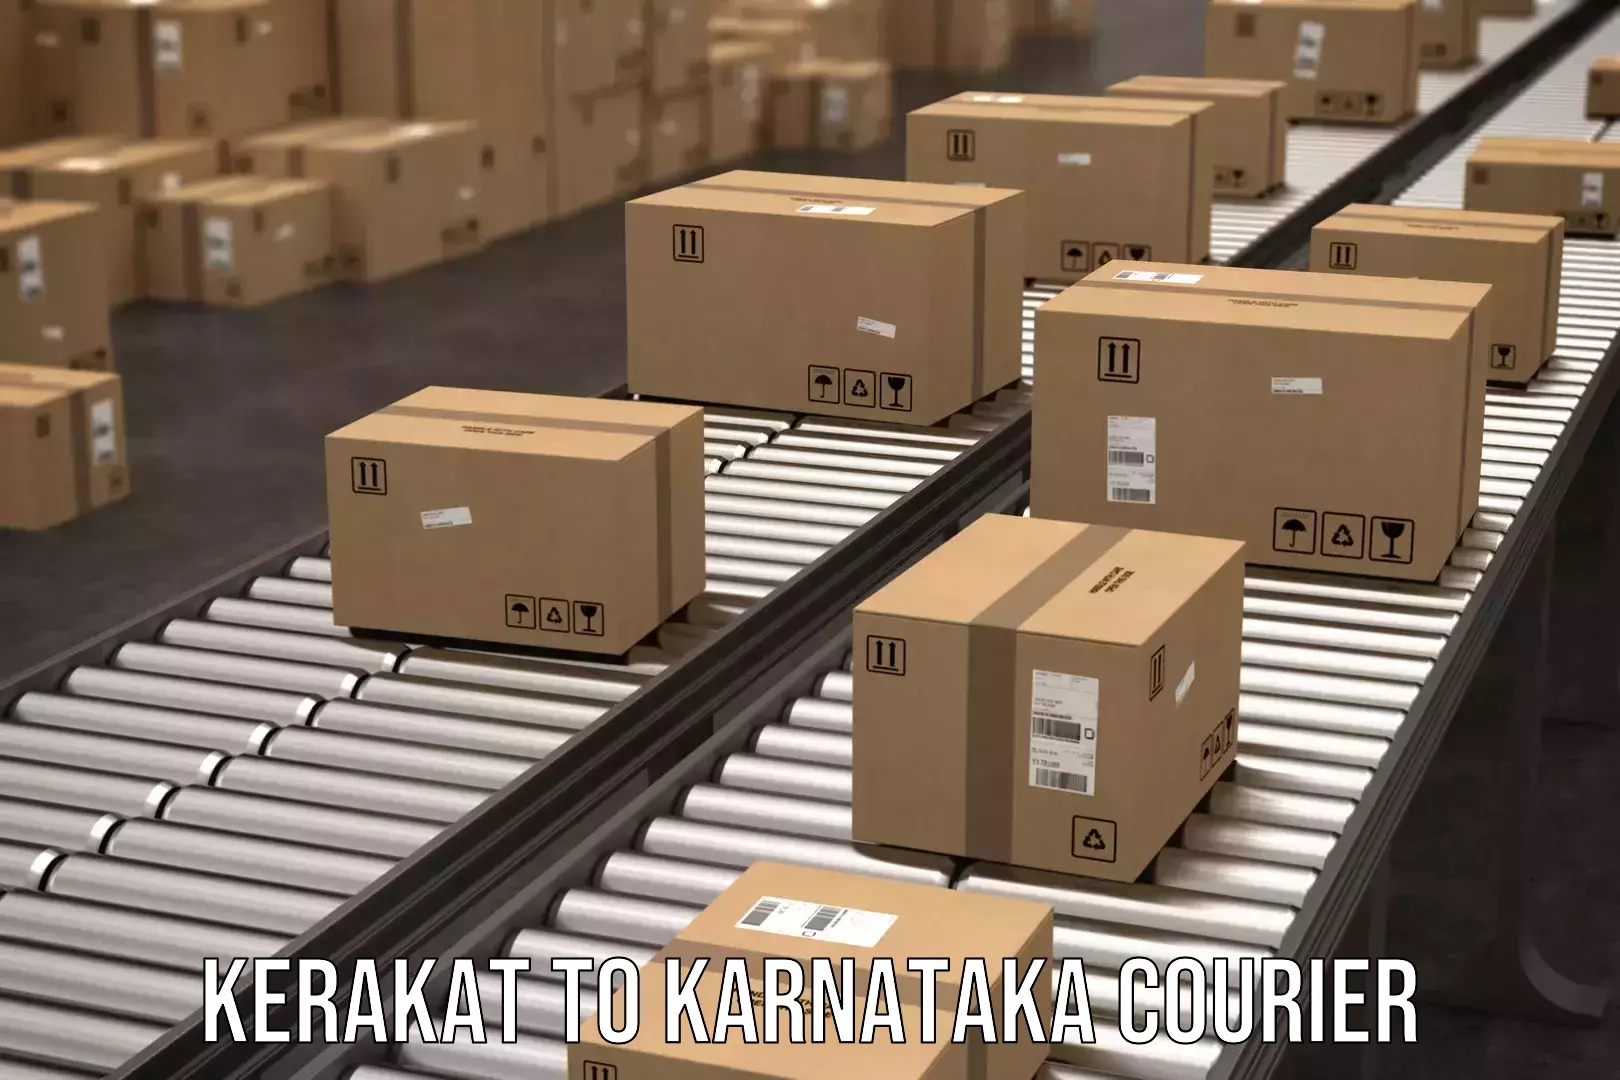 Express delivery solutions Kerakat to Karnataka